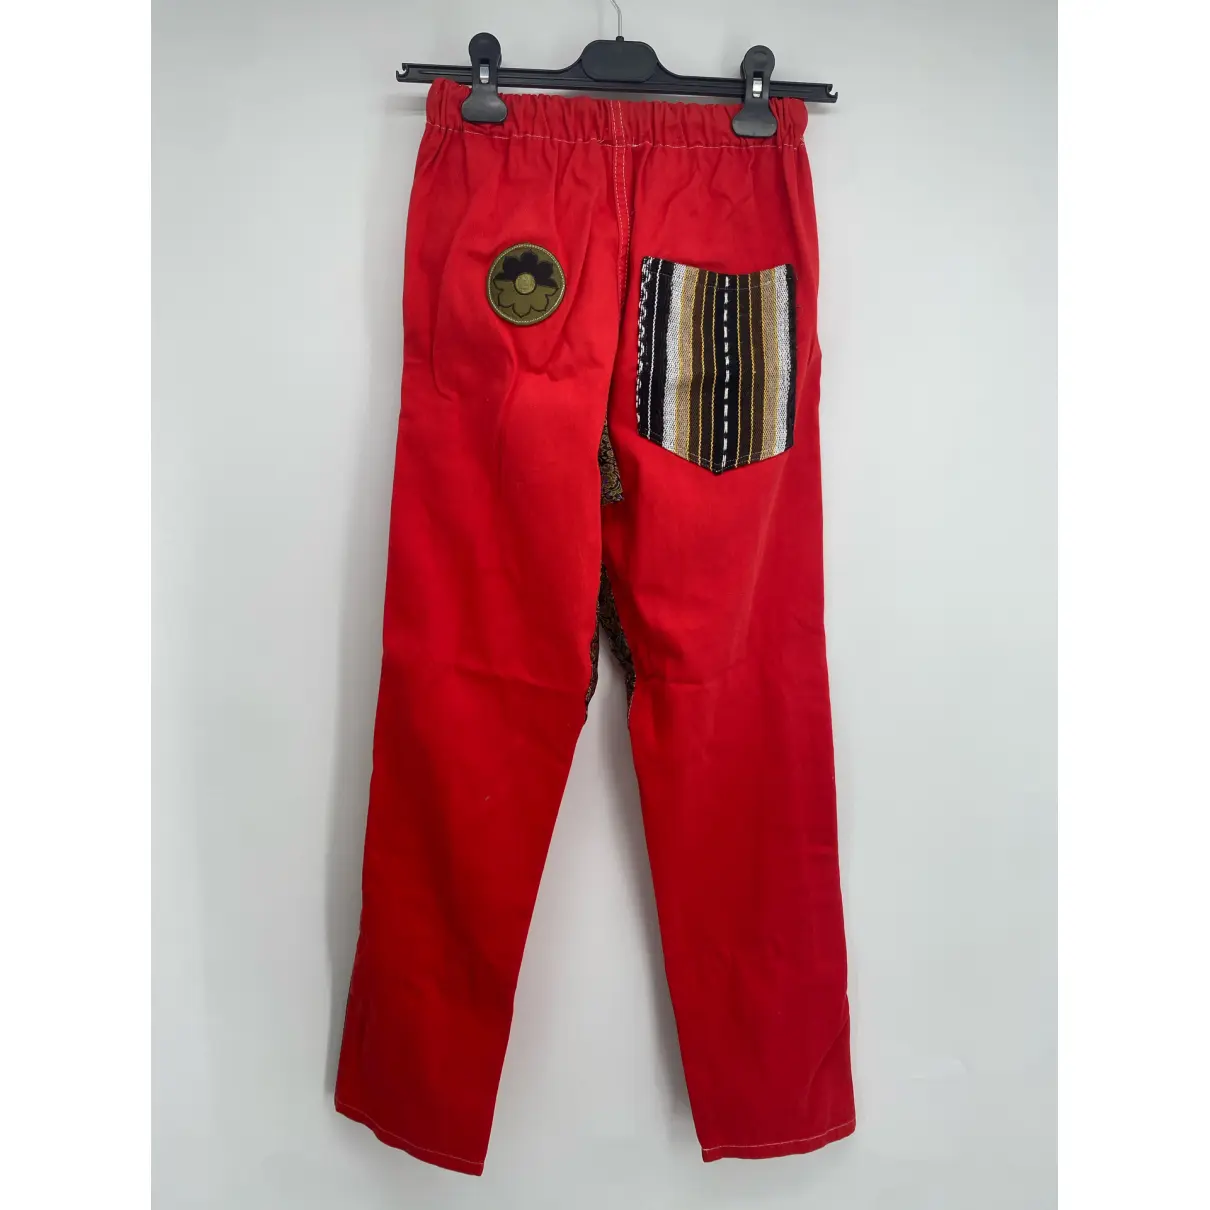 Buy Monoki Trousers online